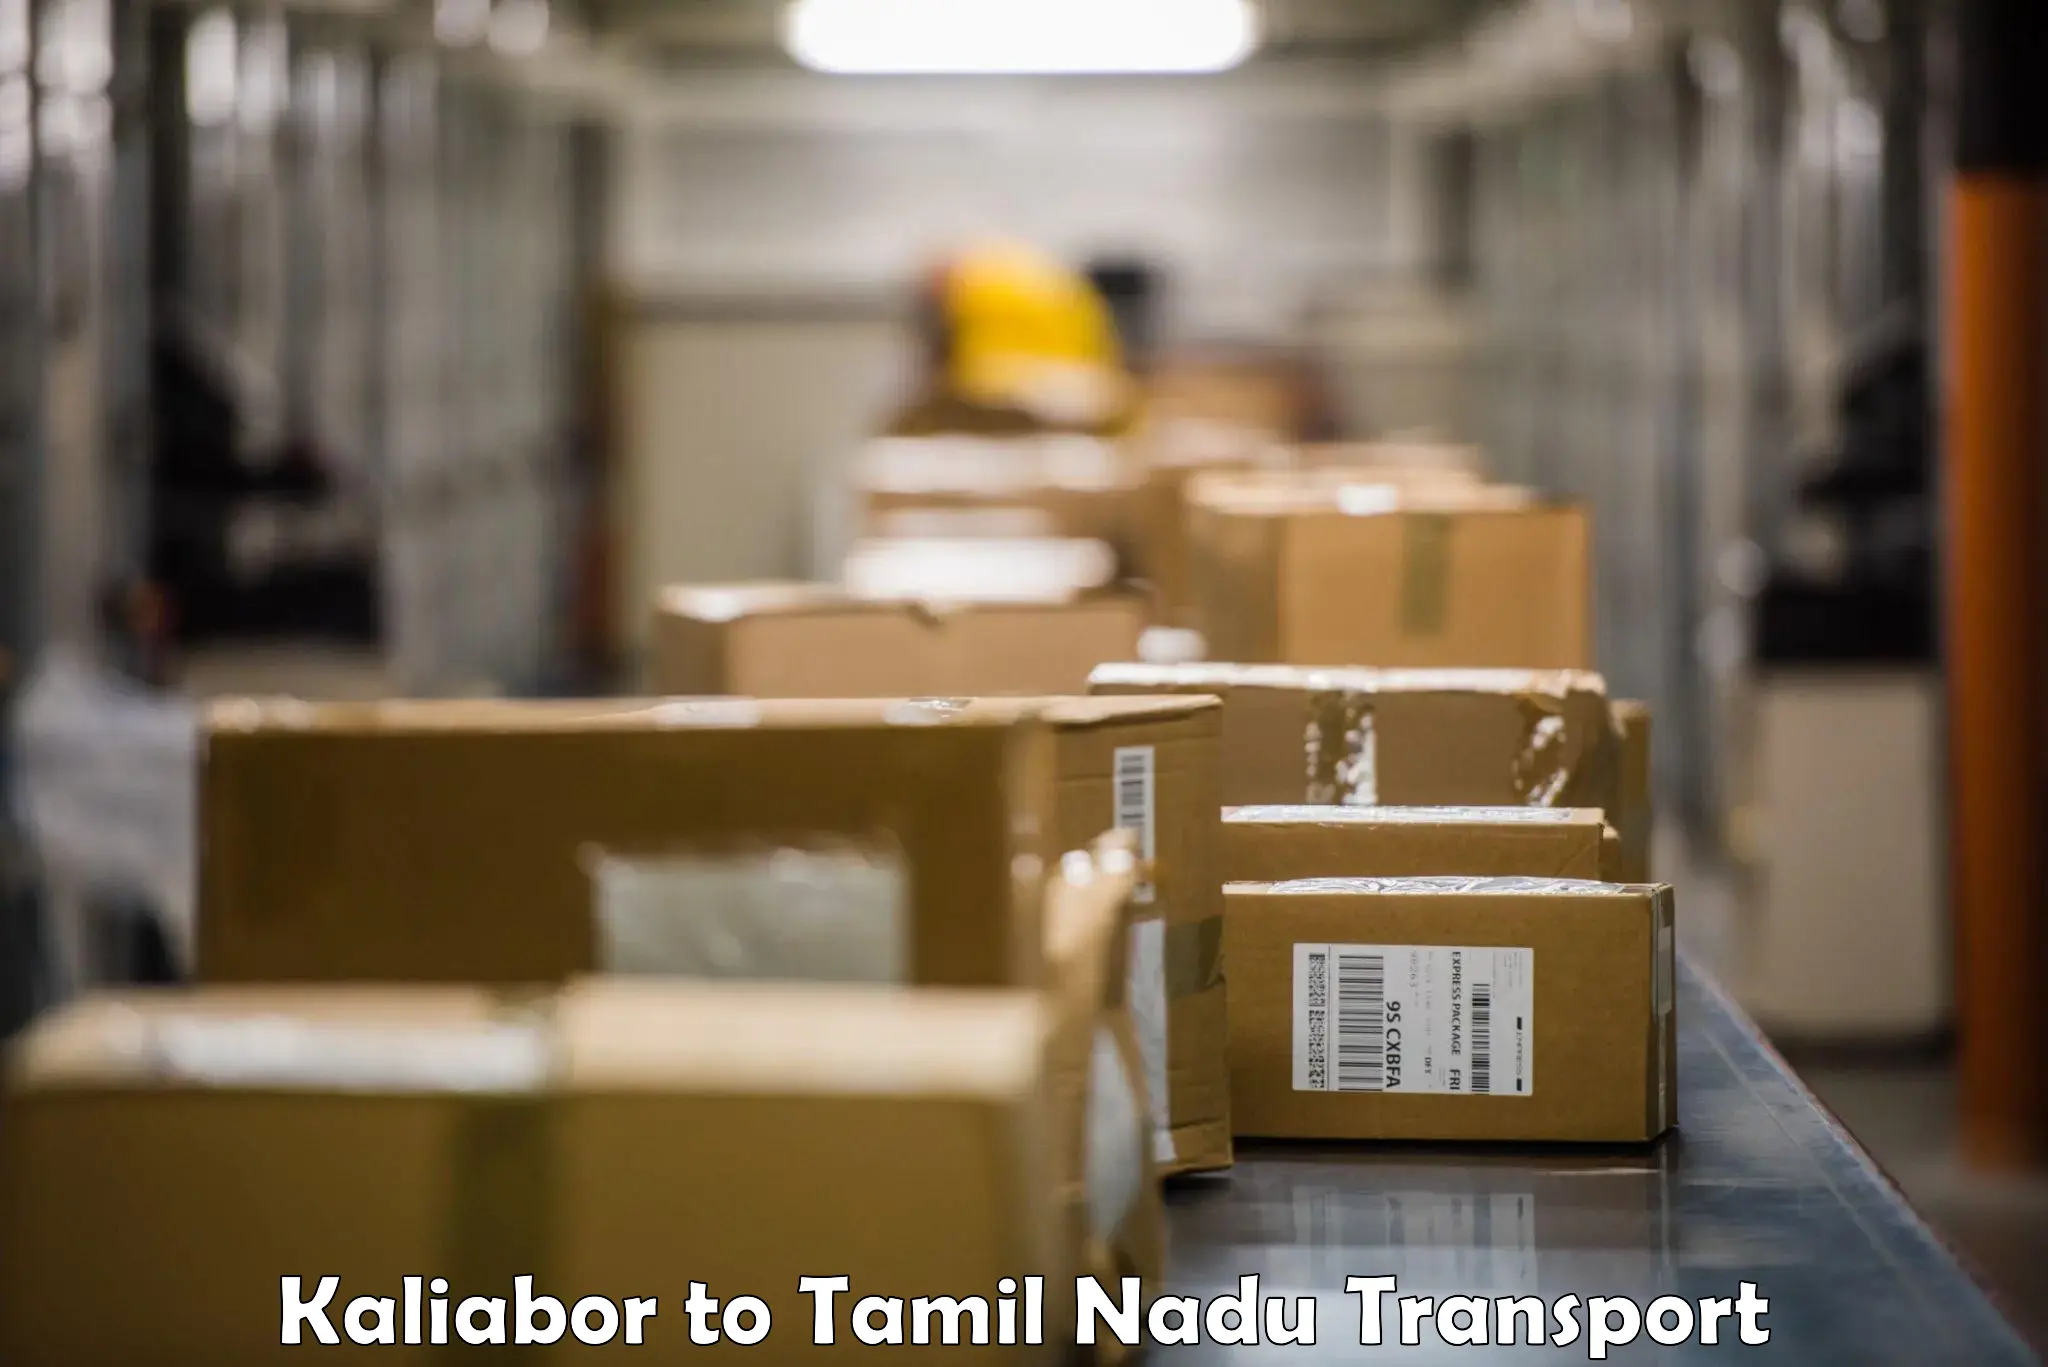 Truck transport companies in India in Kaliabor to Palladam